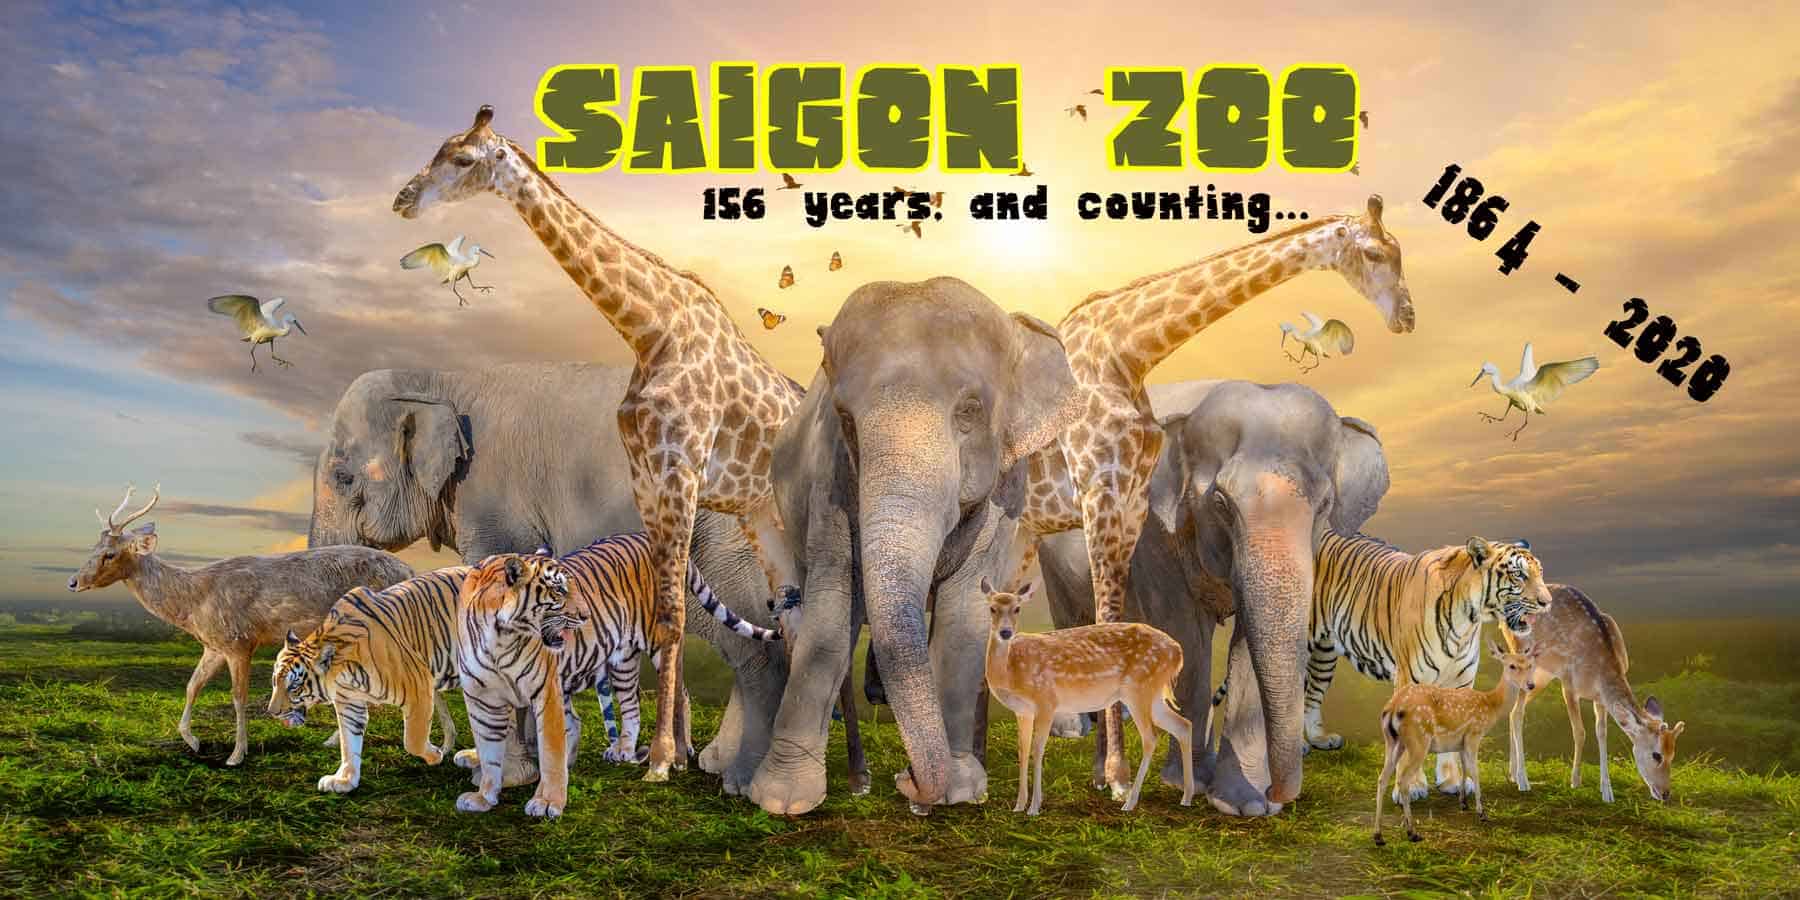 Trang chủ - Thảo Cầm Viên - Saigon Zoo & Botanical Gardens